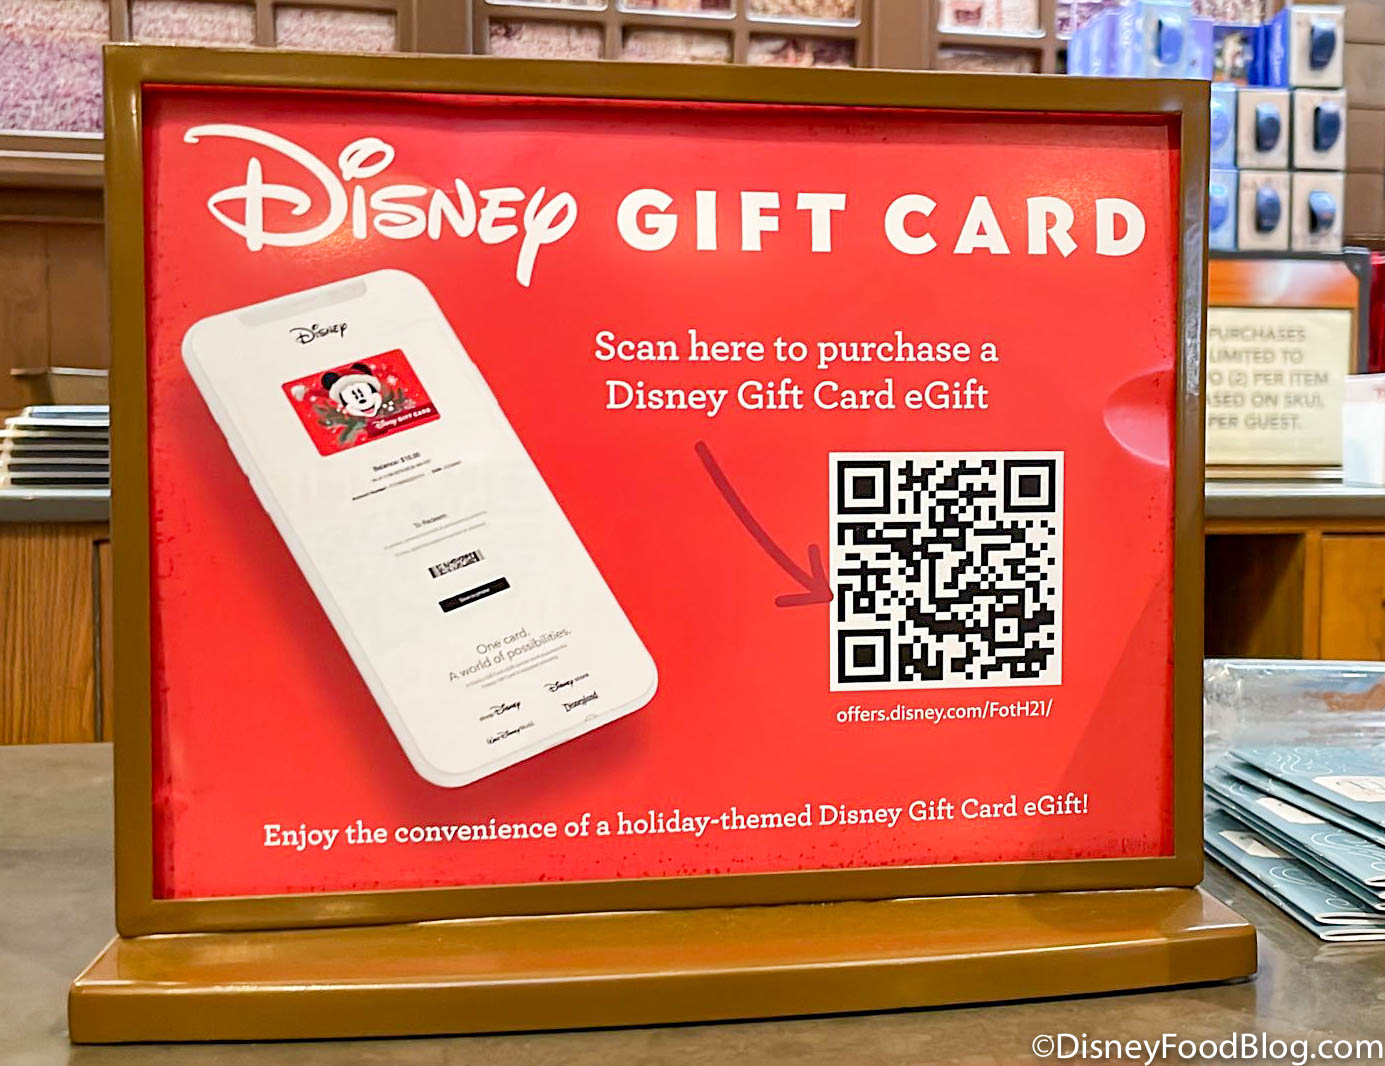 Walt Disney Animation Studios Release 6 Digital Holiday Cards from